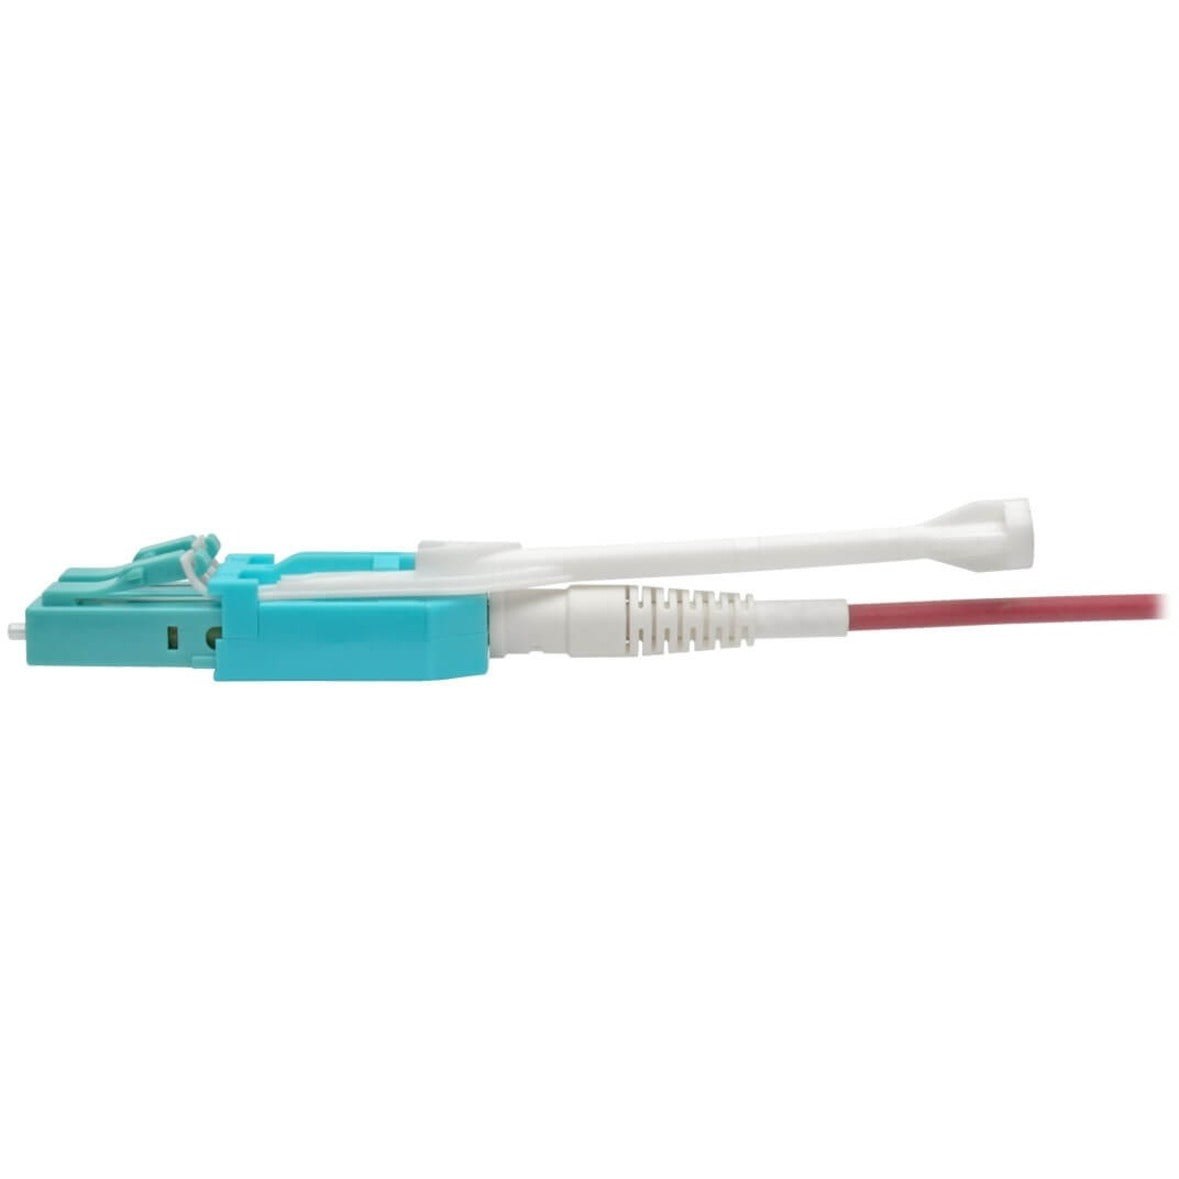 Tripp Lite N821-05M-MG-T Fiber Optic Network Cable, 16.40 ft, Multi-mode, 100 Gbit/s, Magenta